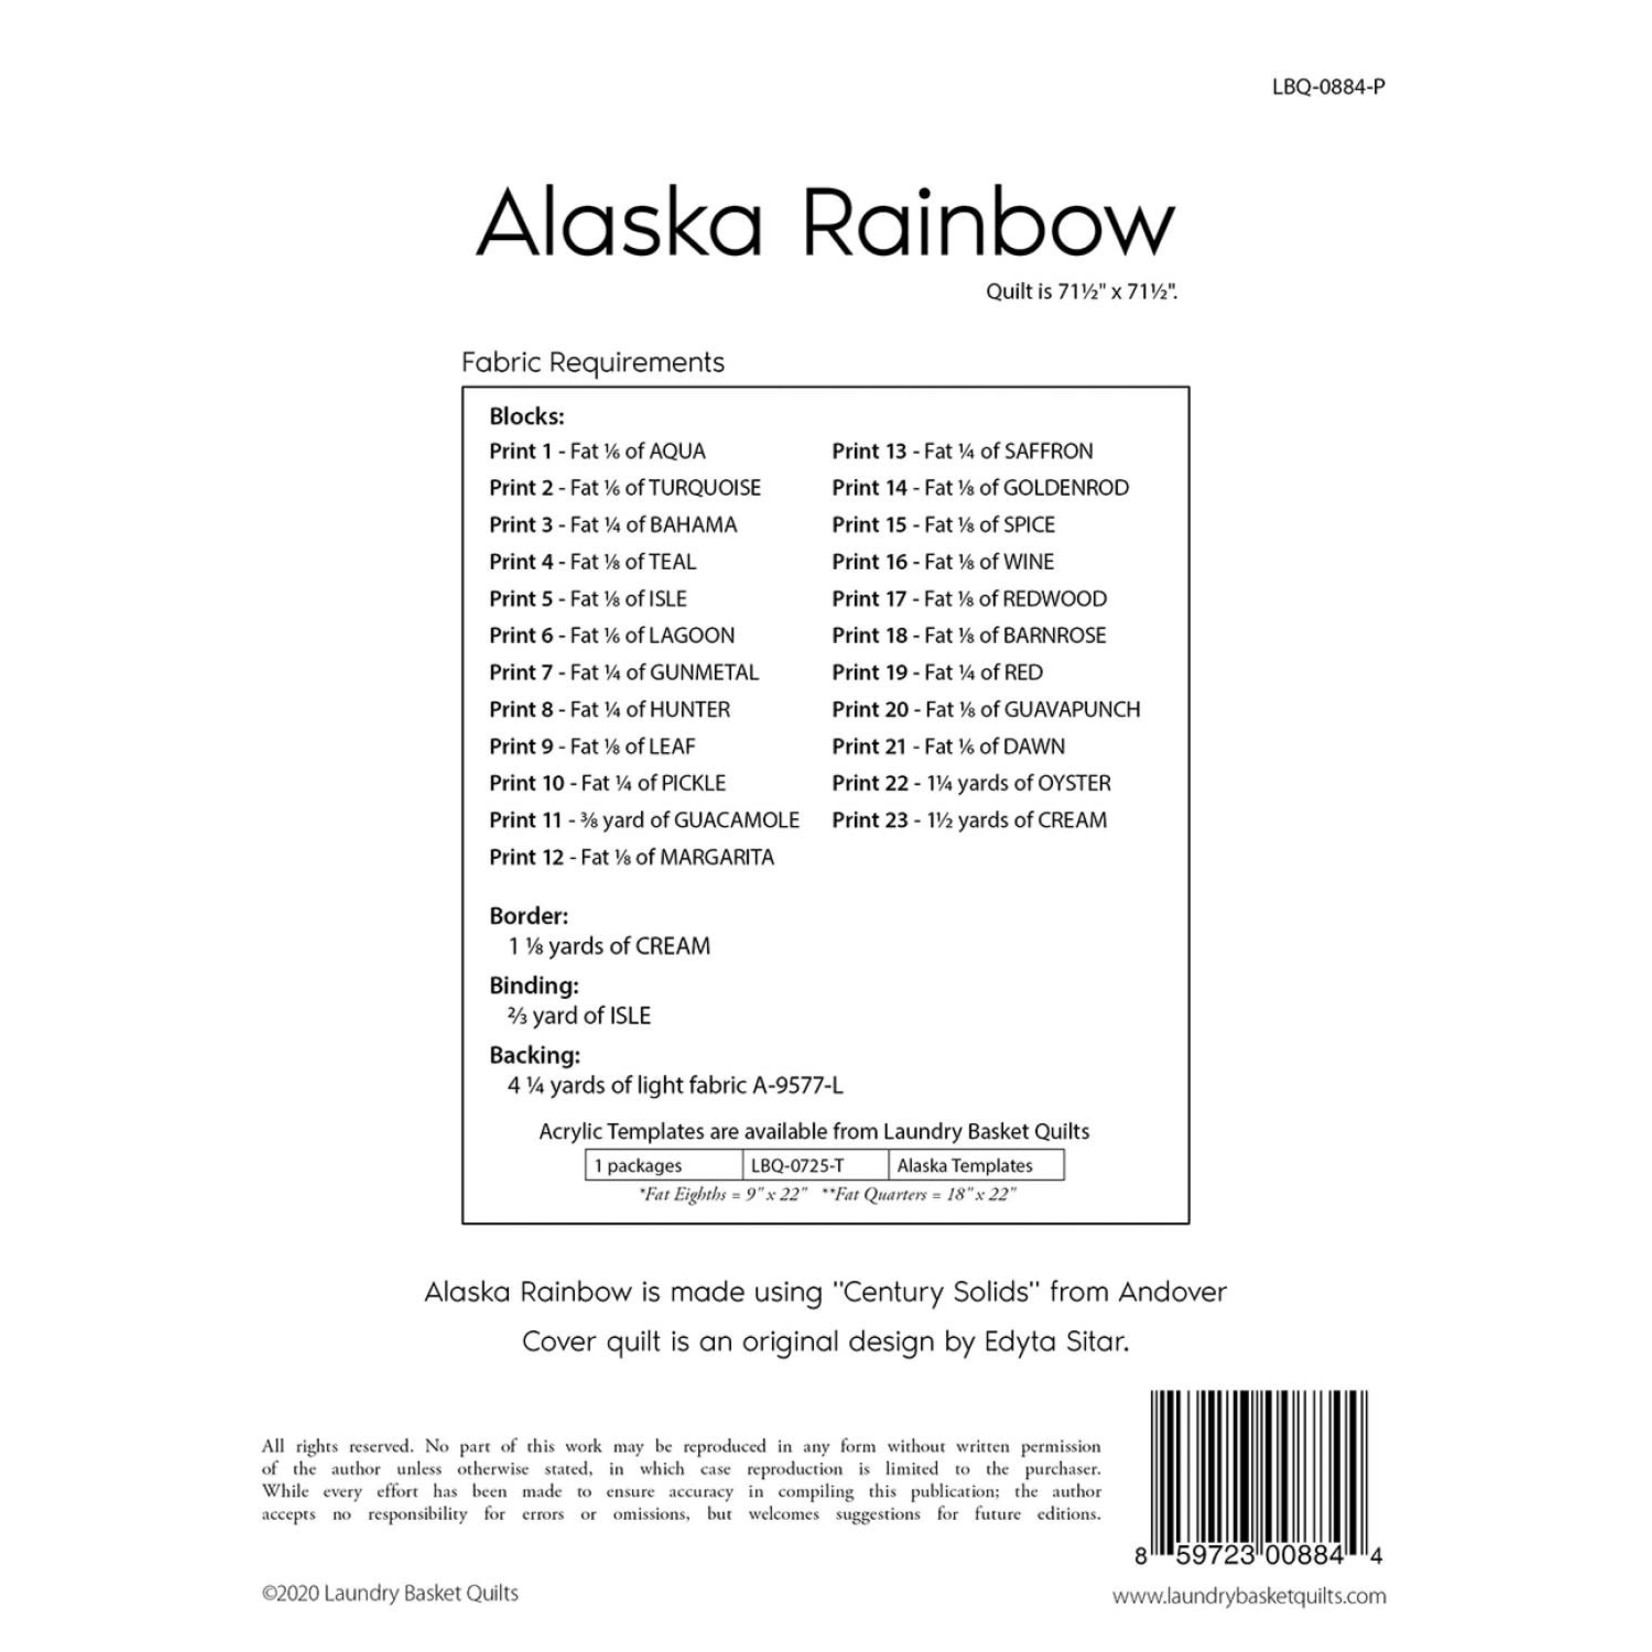 Laundry Basket Quilts Alaska Rainbow Pattern